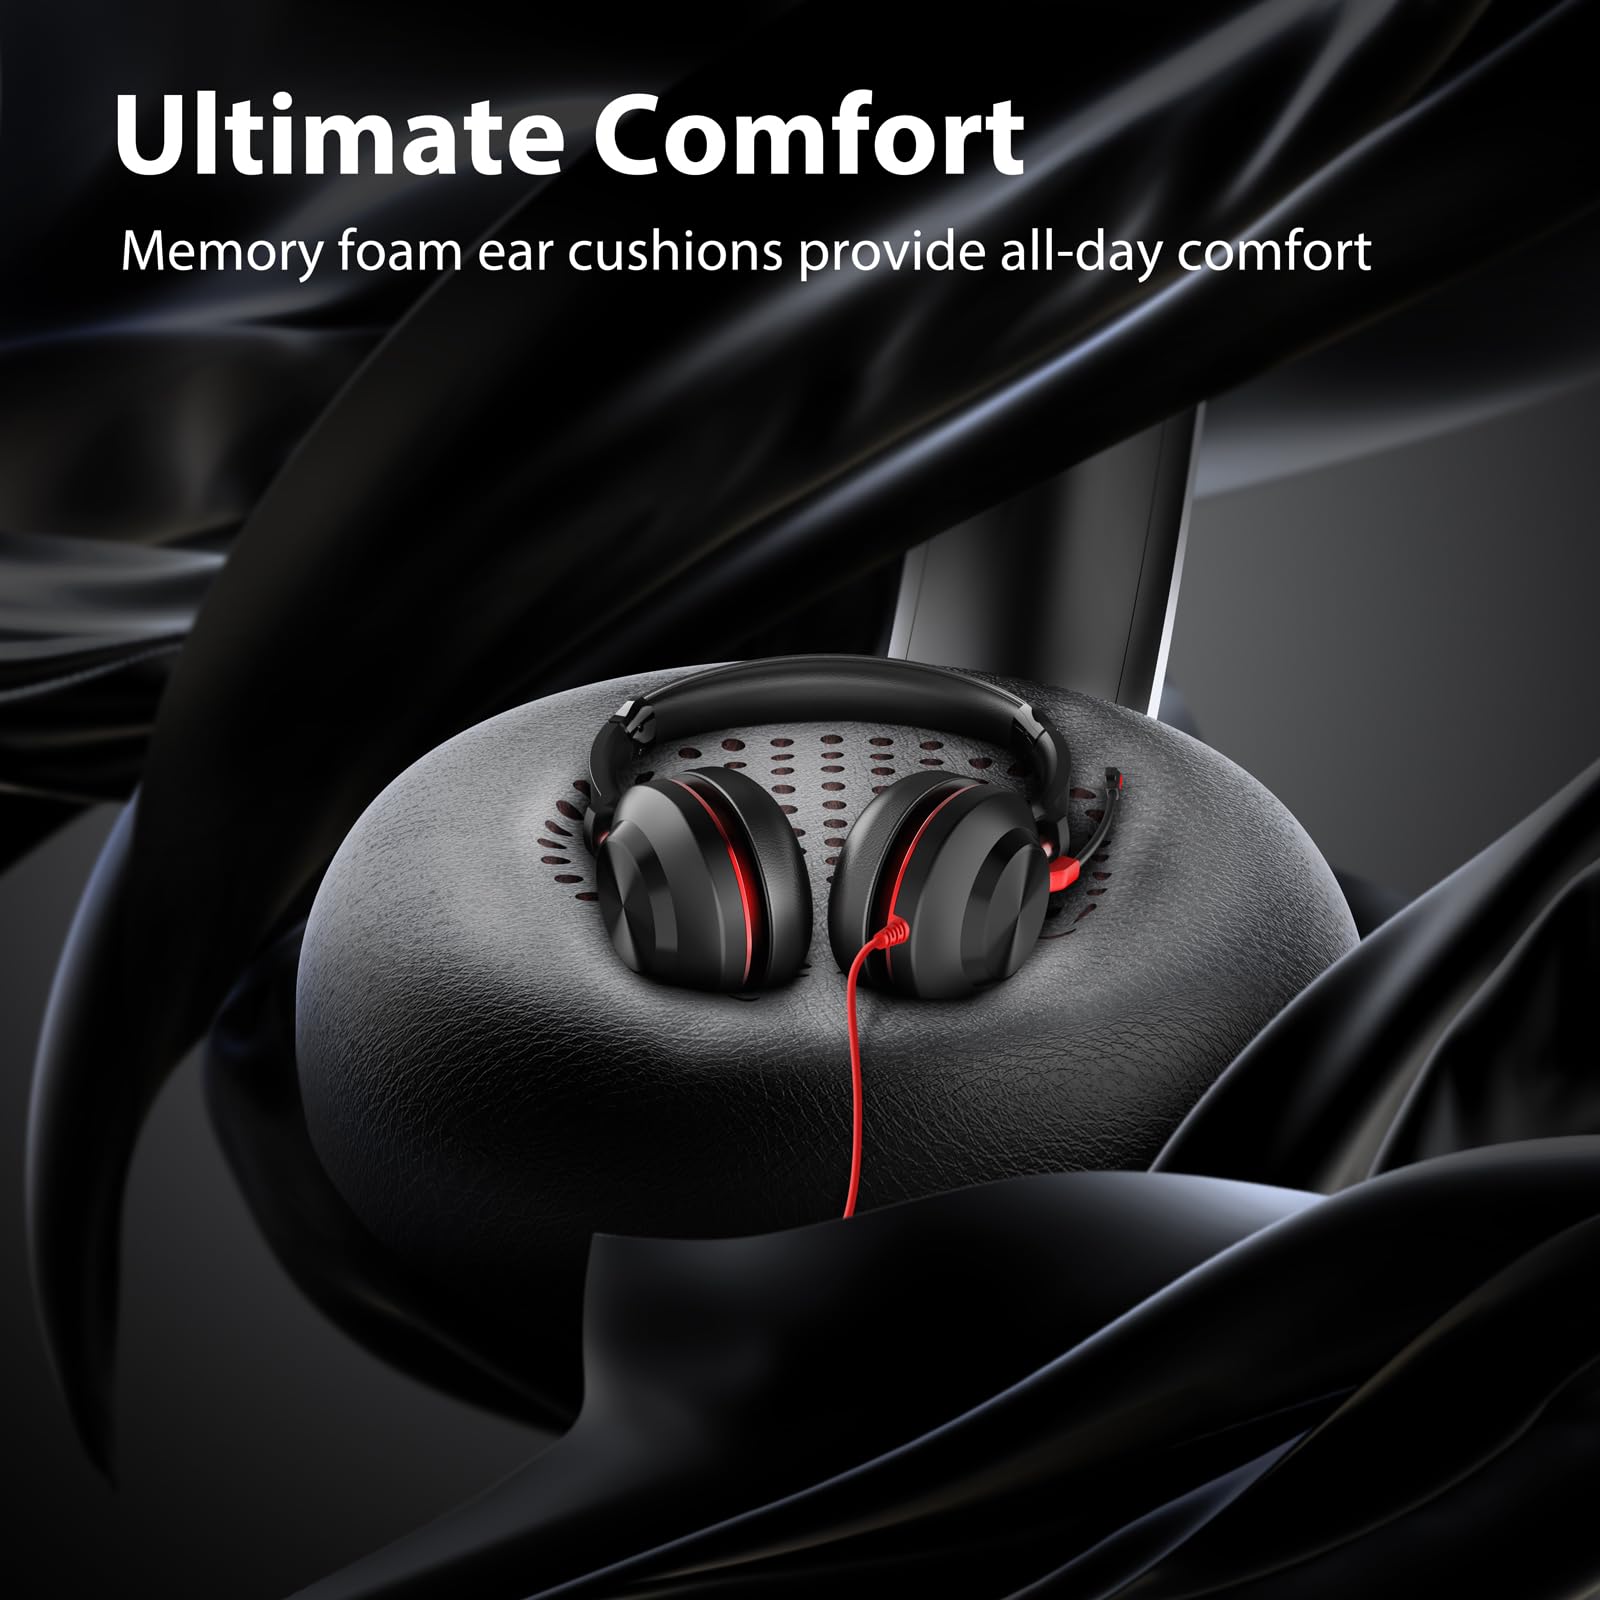 Ultimate Comfort,Memory foam ear cushions provide all-day comfort.